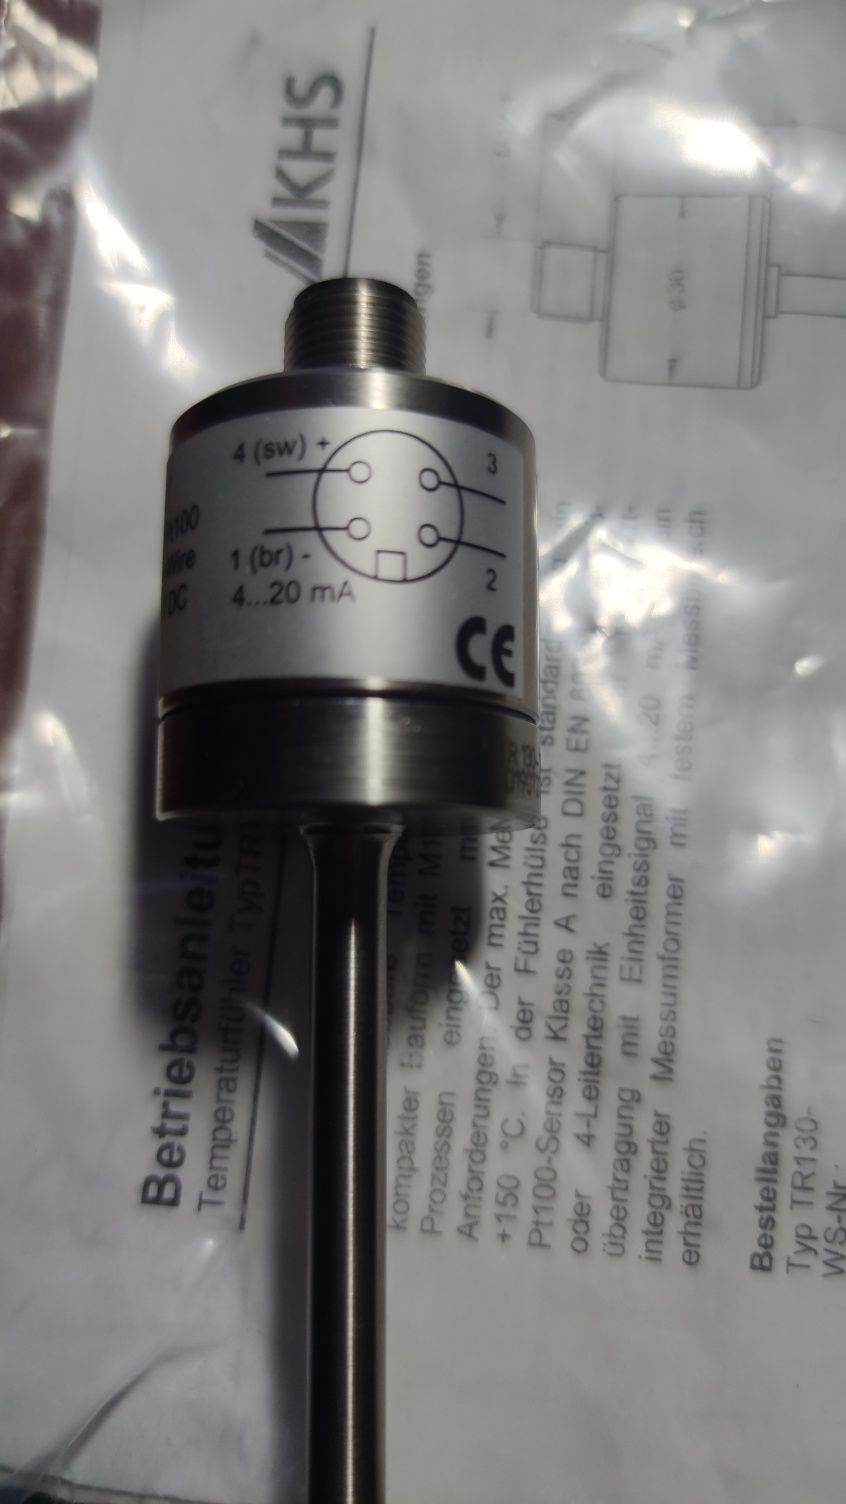 KHS TR130 Temperature Probe Sensor Pt100 -50 +150C,